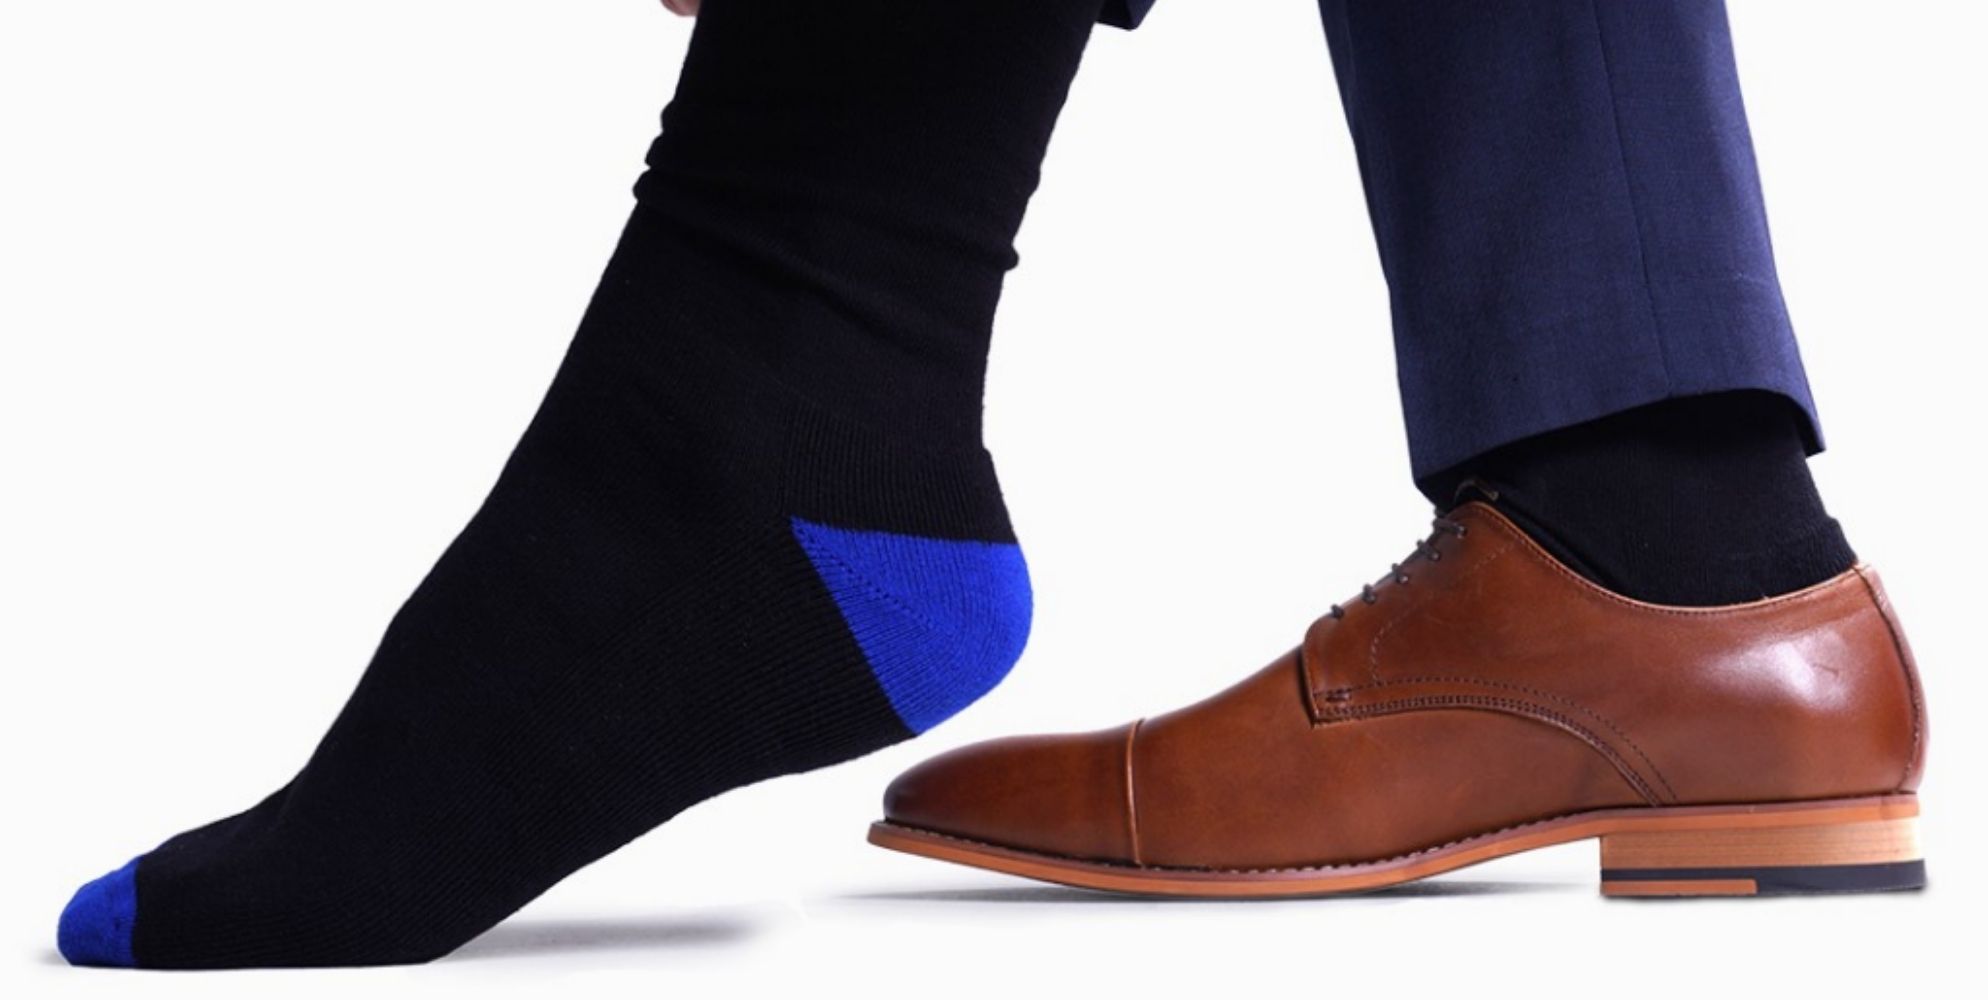 Gripperz Adult Grip Socks - Non Slip Circulation Socks, Caring Clothing